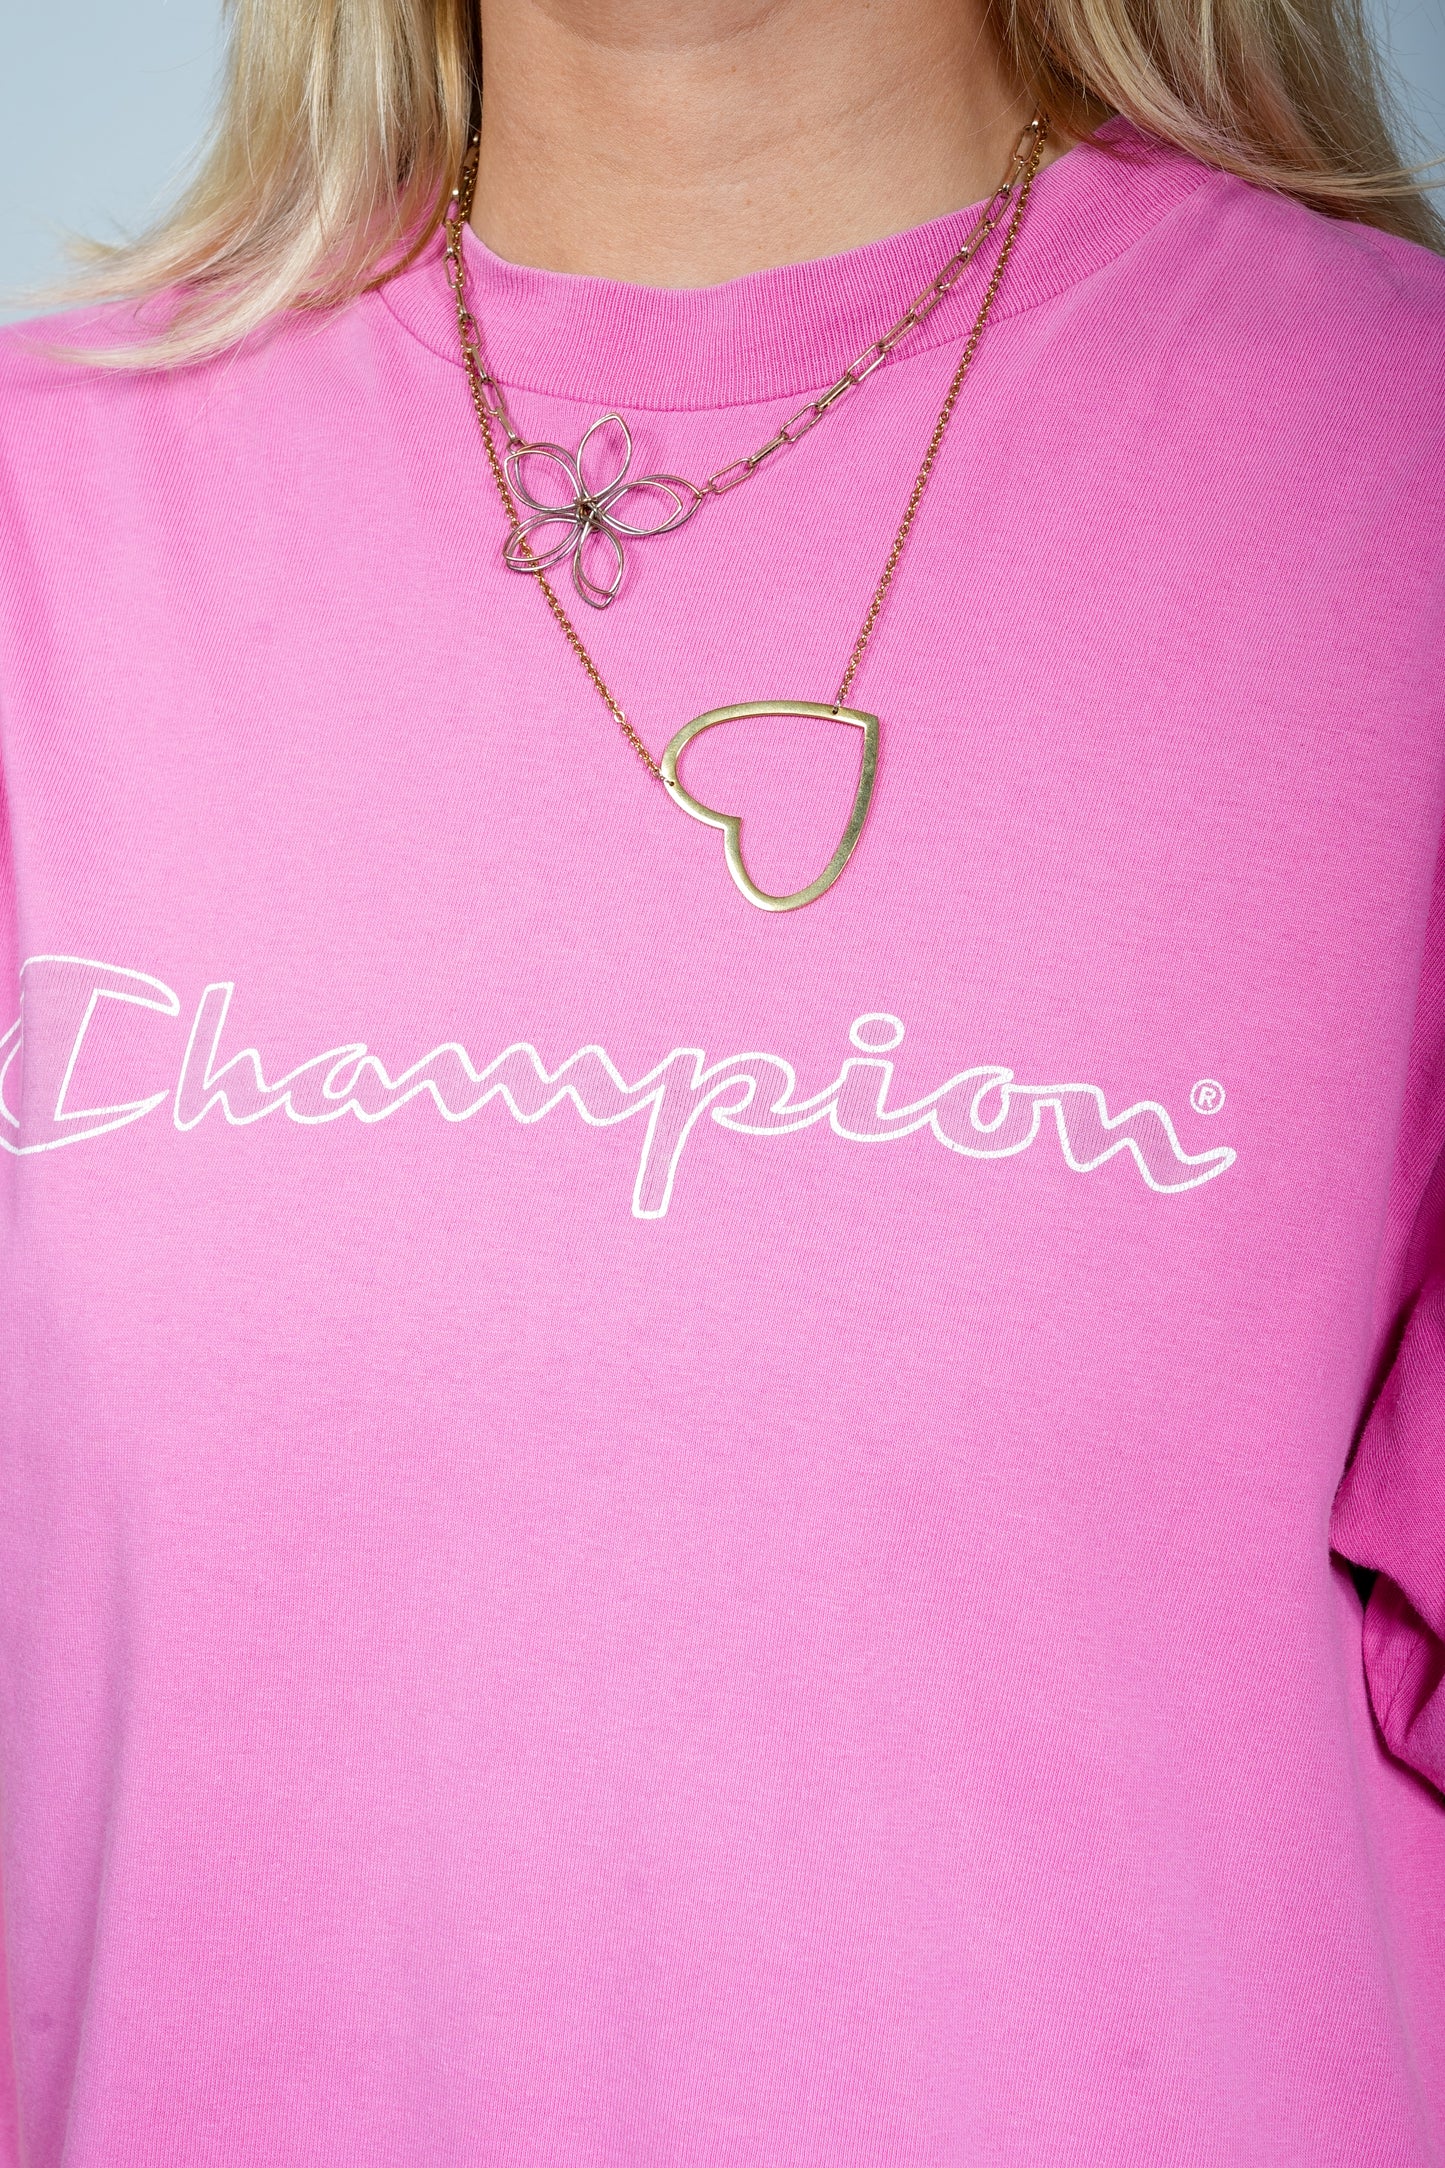 Champion - T-shirt